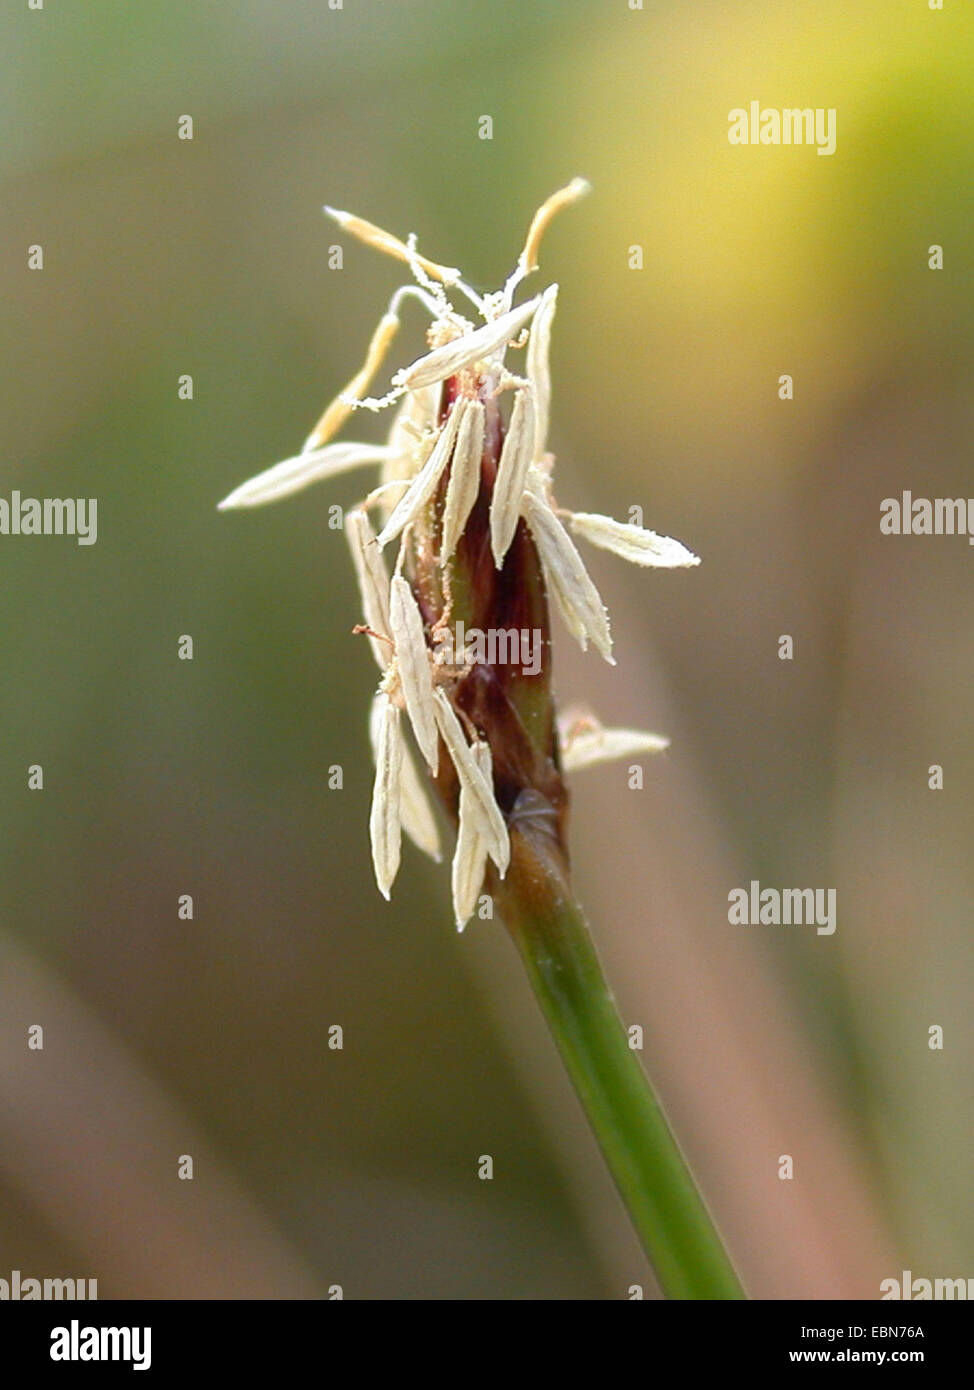 many-stalked spike-rush (Eleocharis multicaulis), inflorescence with stamina, Germany Stock Photo